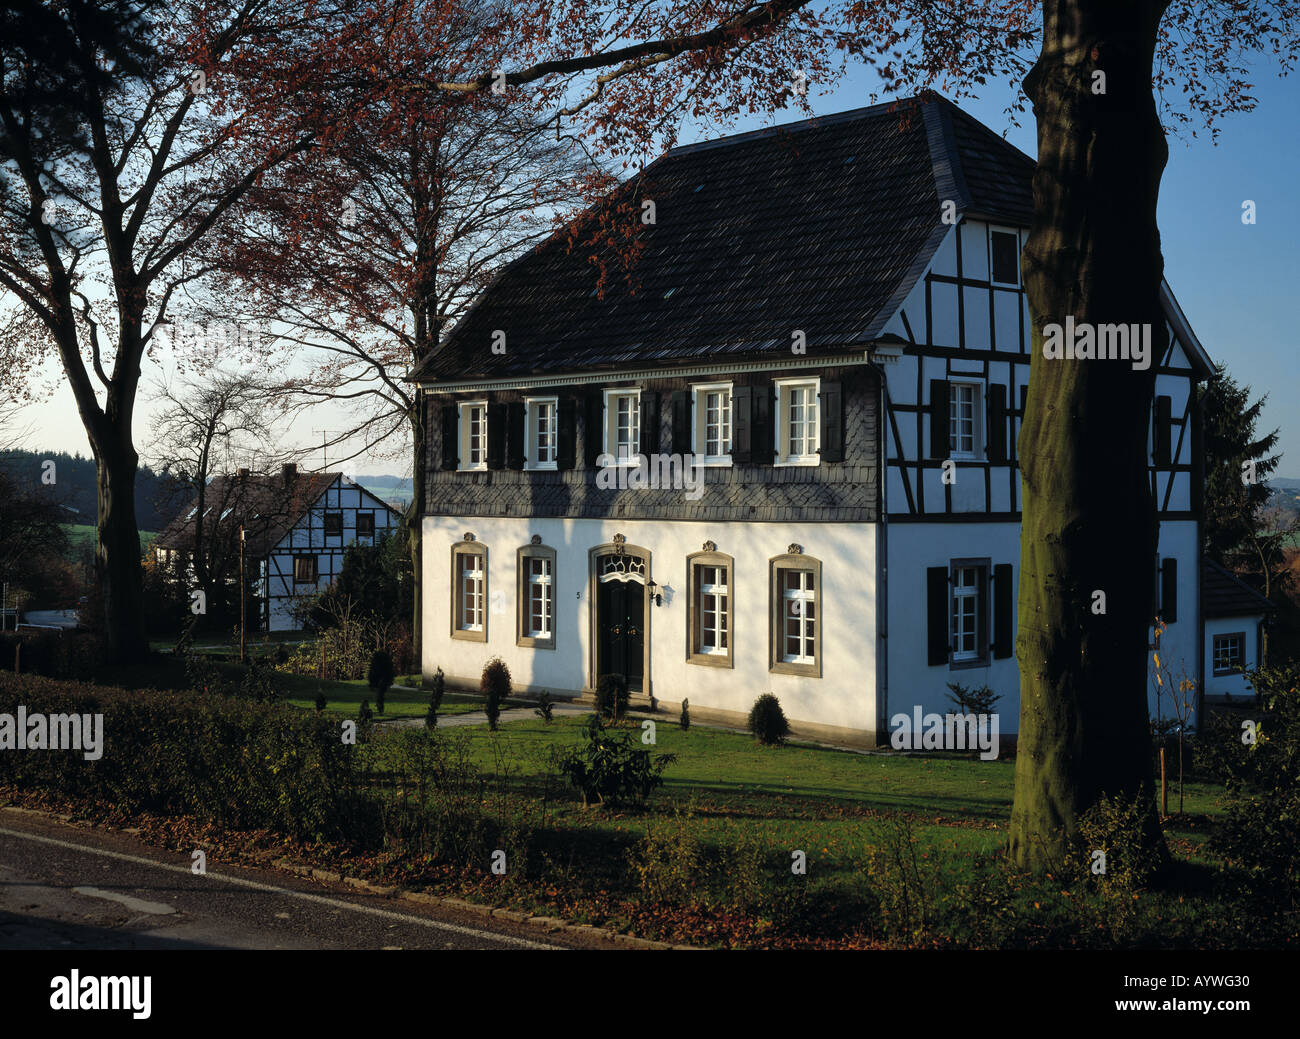 Bergisches Haus unter Herbstbaeumen, Schieferverkleidung, Lindlar, Naturpark Bergisches Land, Nordrhein-Westfalen Stock Photo